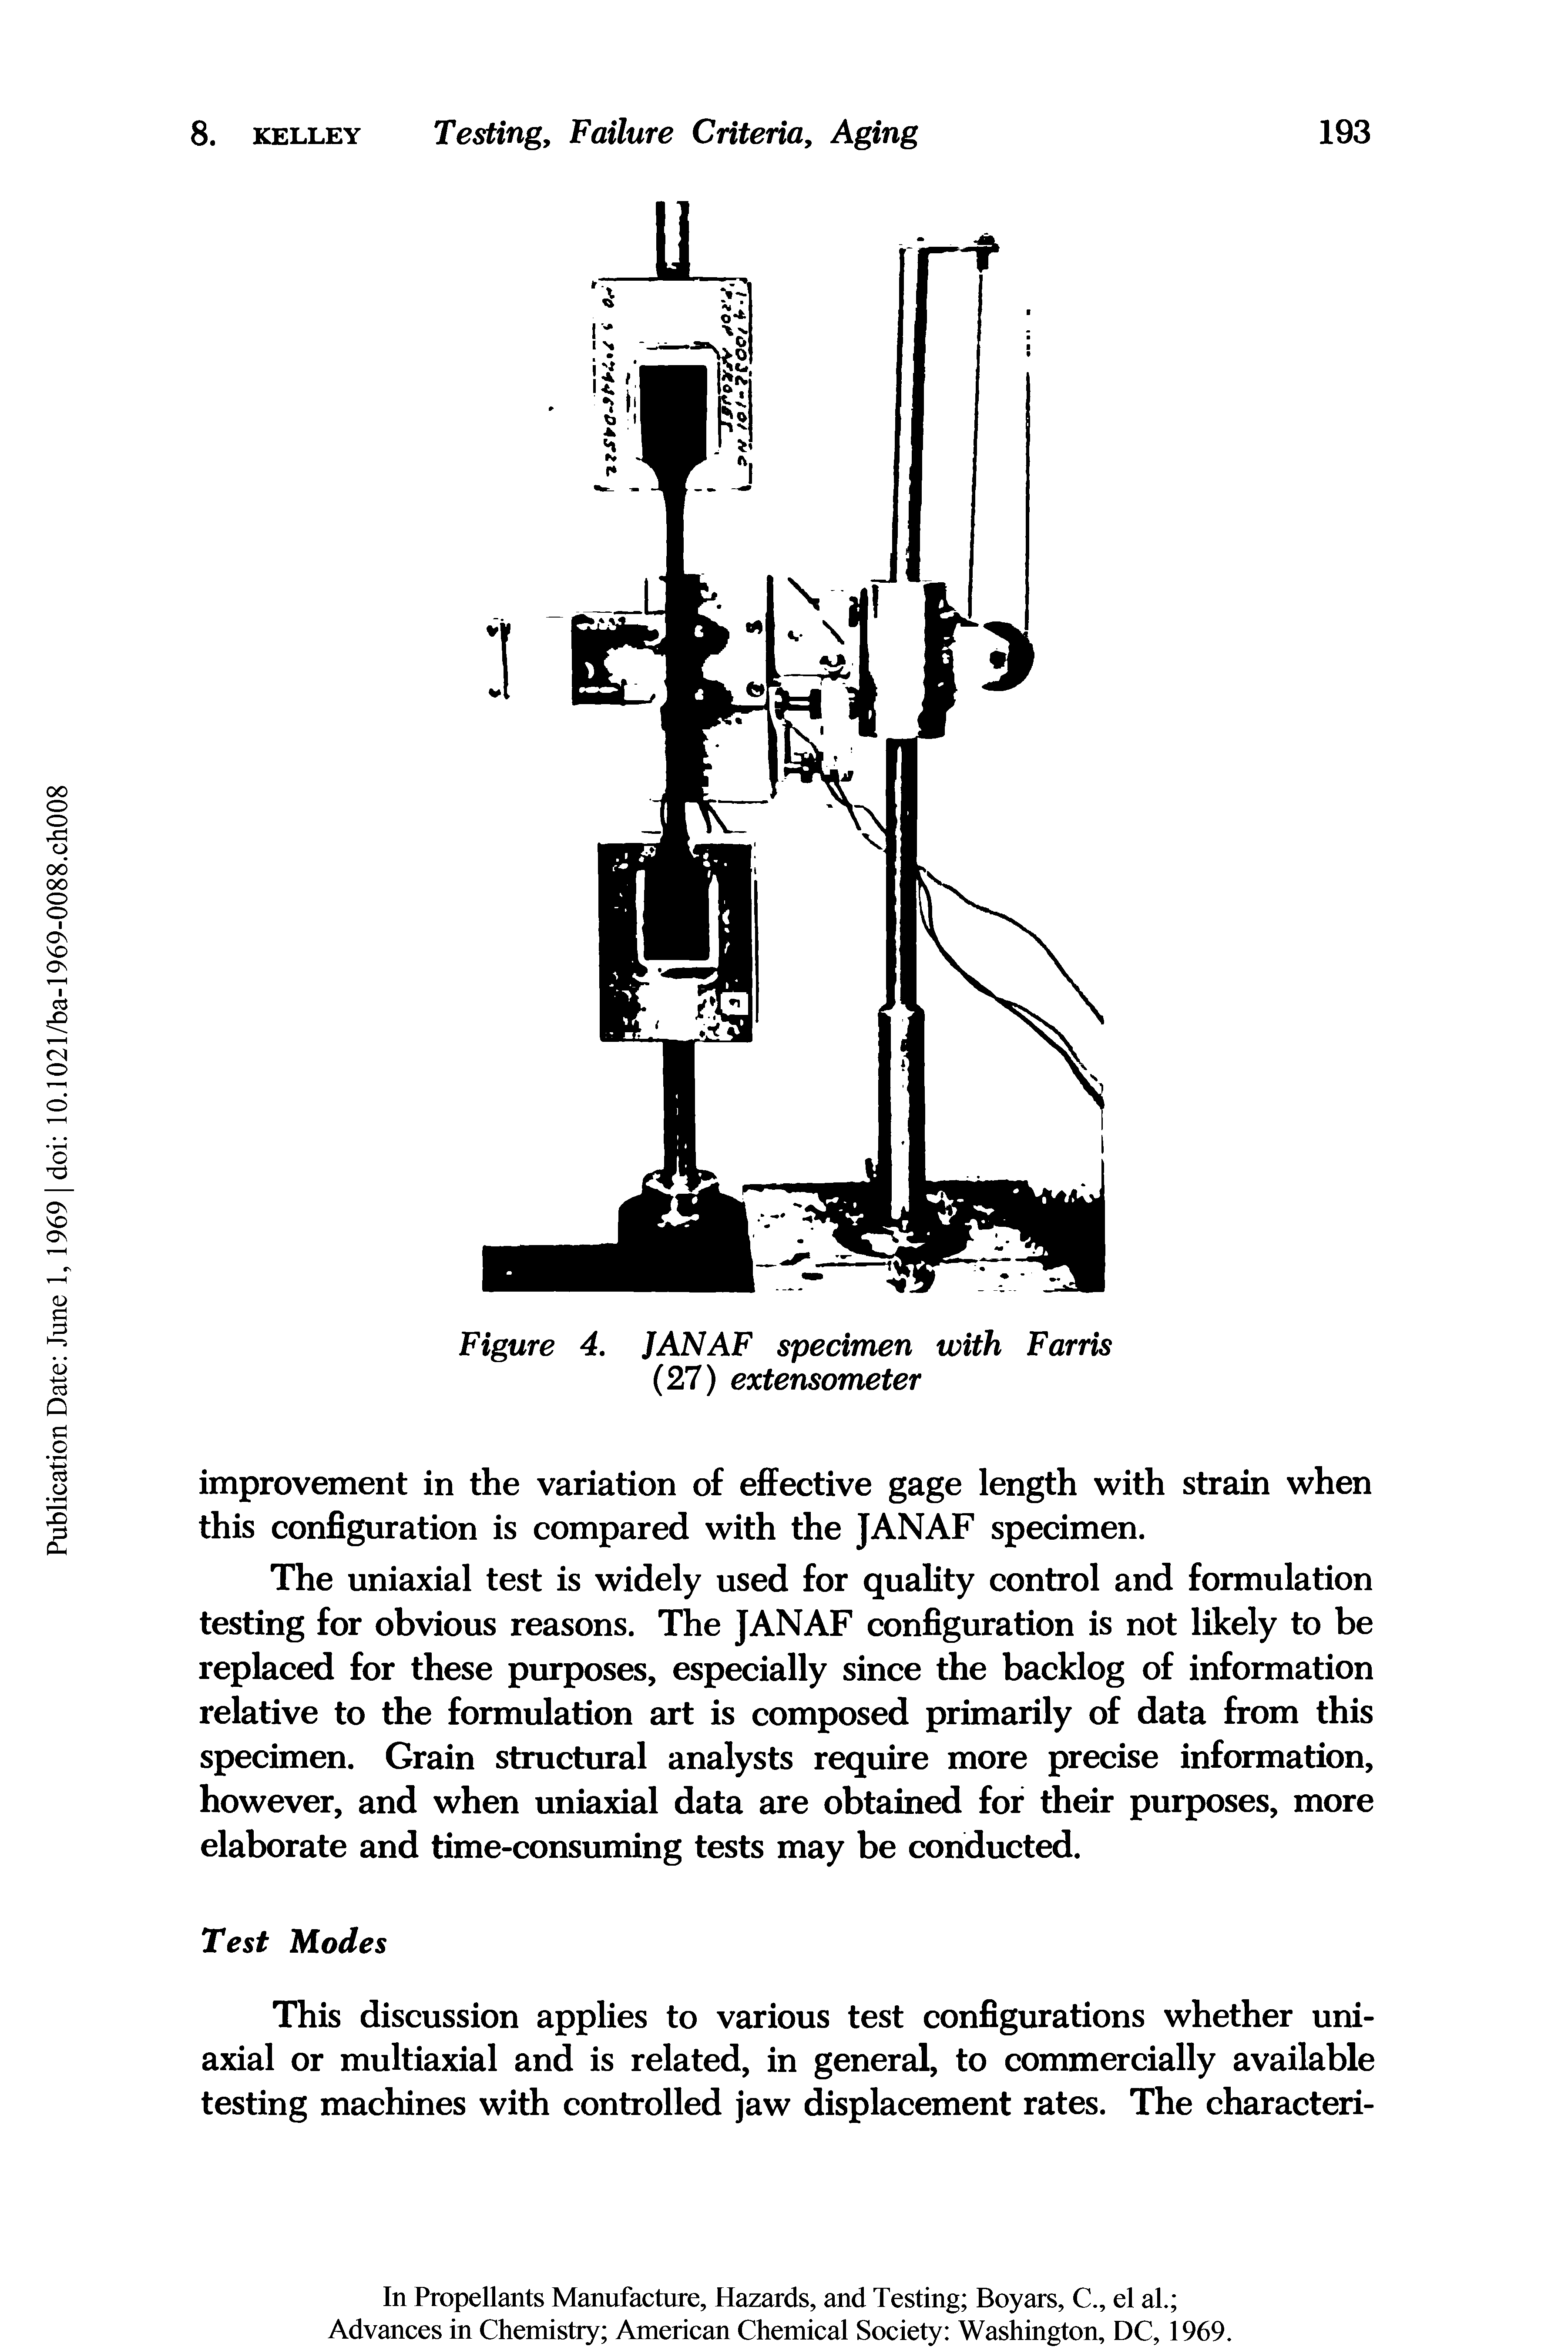 Figure 4. JANAF specimen with Farris (27) extensometer...